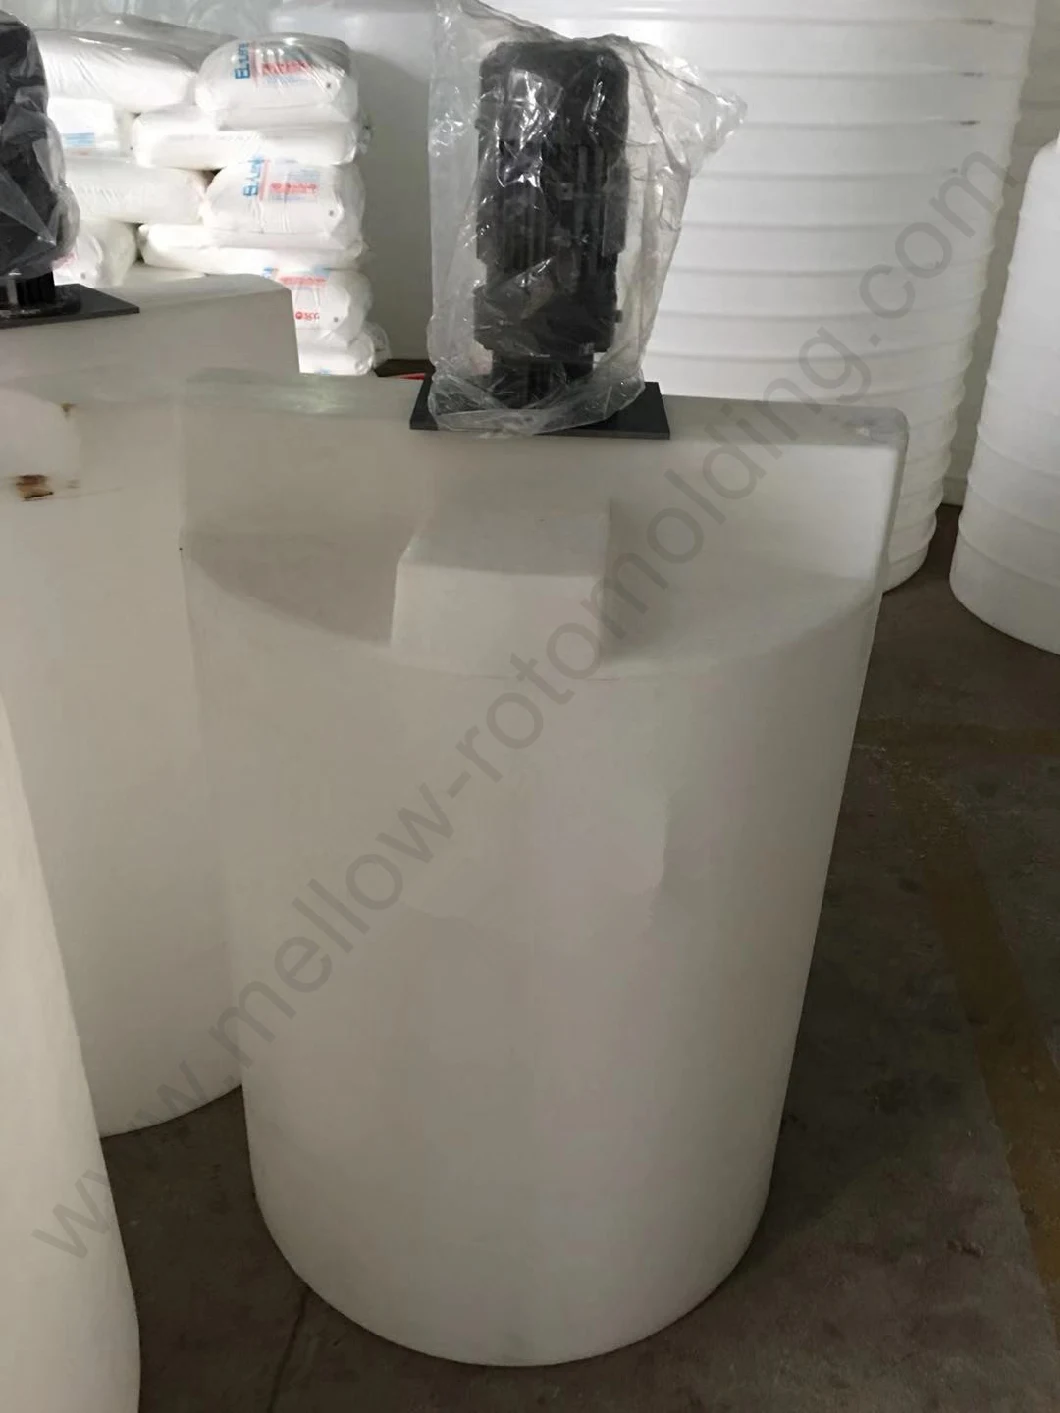 Anti-Corrosion Plastic Chemical Dosing Tank/Storage Box for Sale